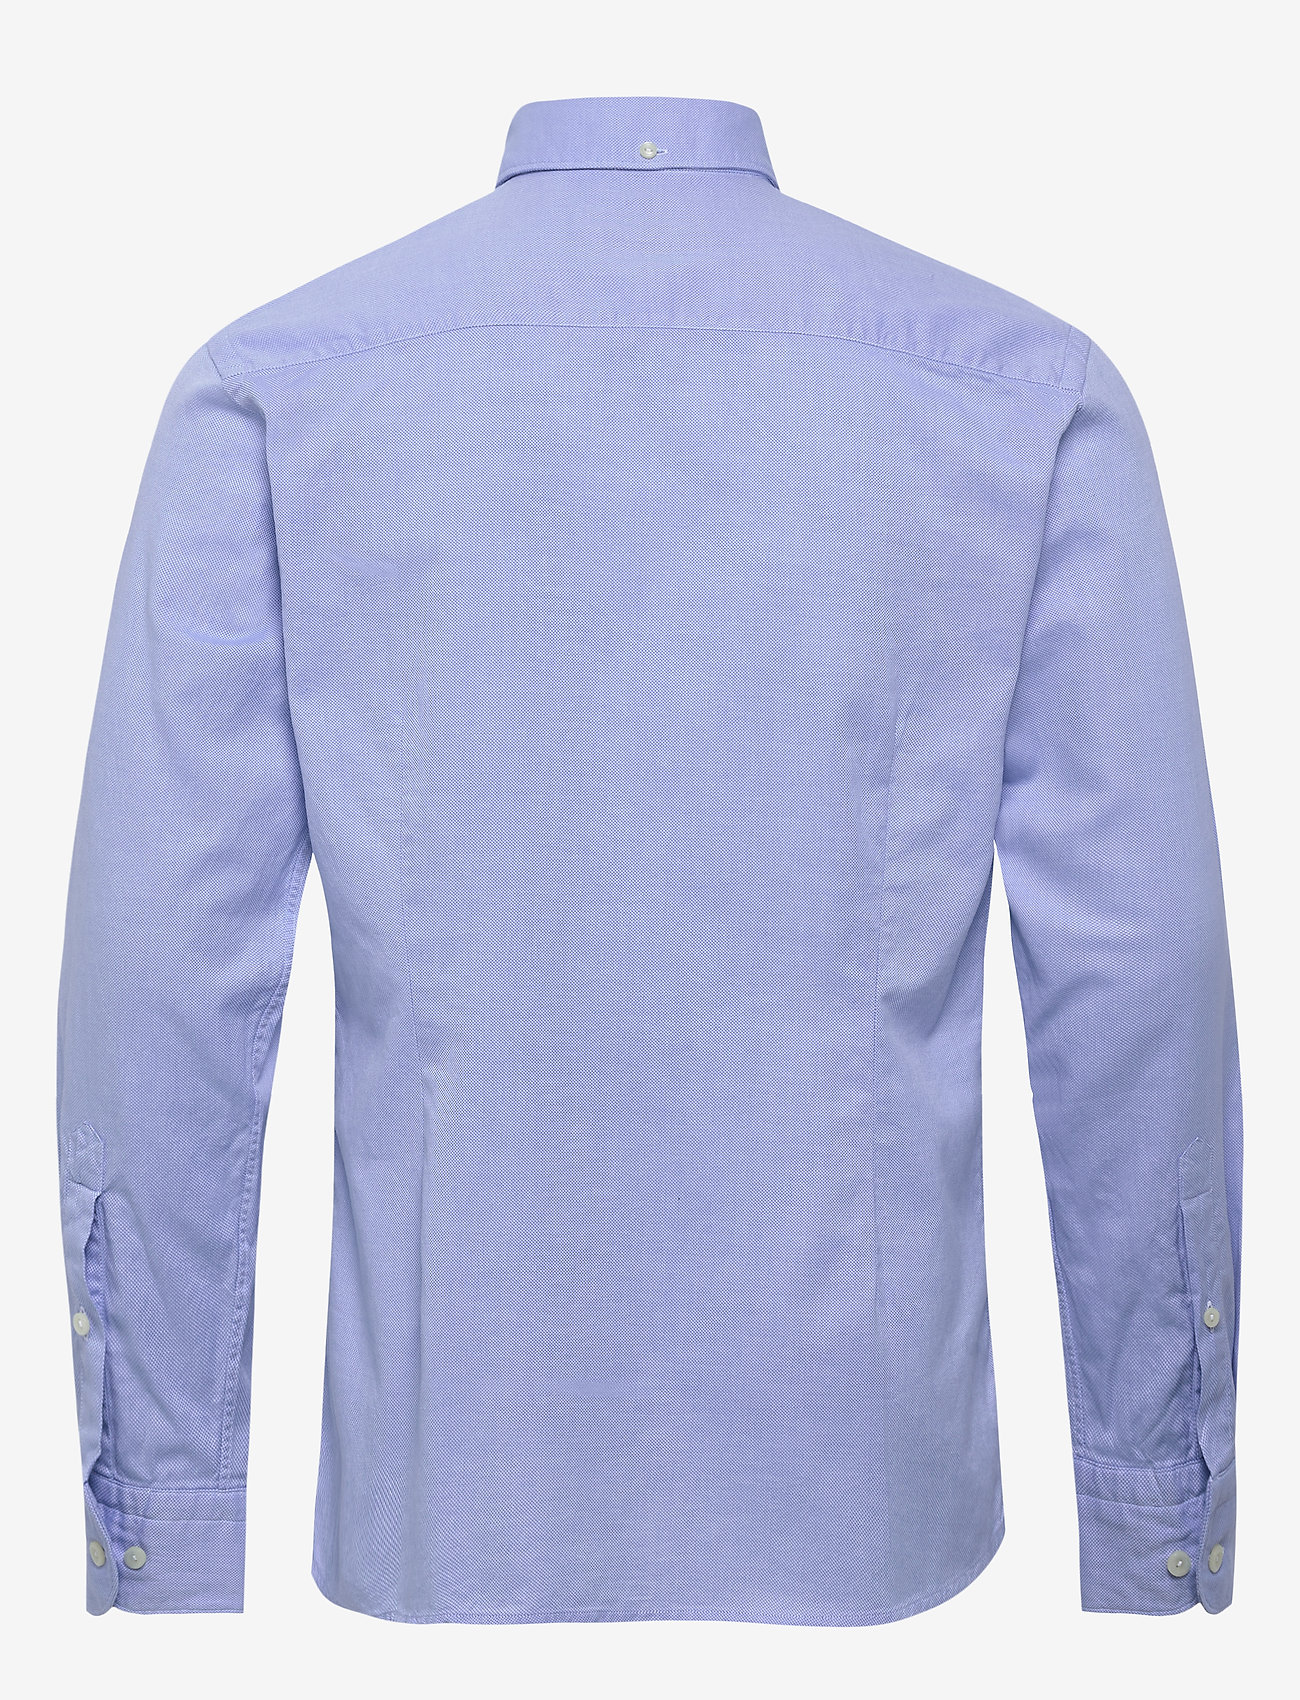 Eton - Royal oxford shirt - Contemporary fit - basic-hemden - blue - 1